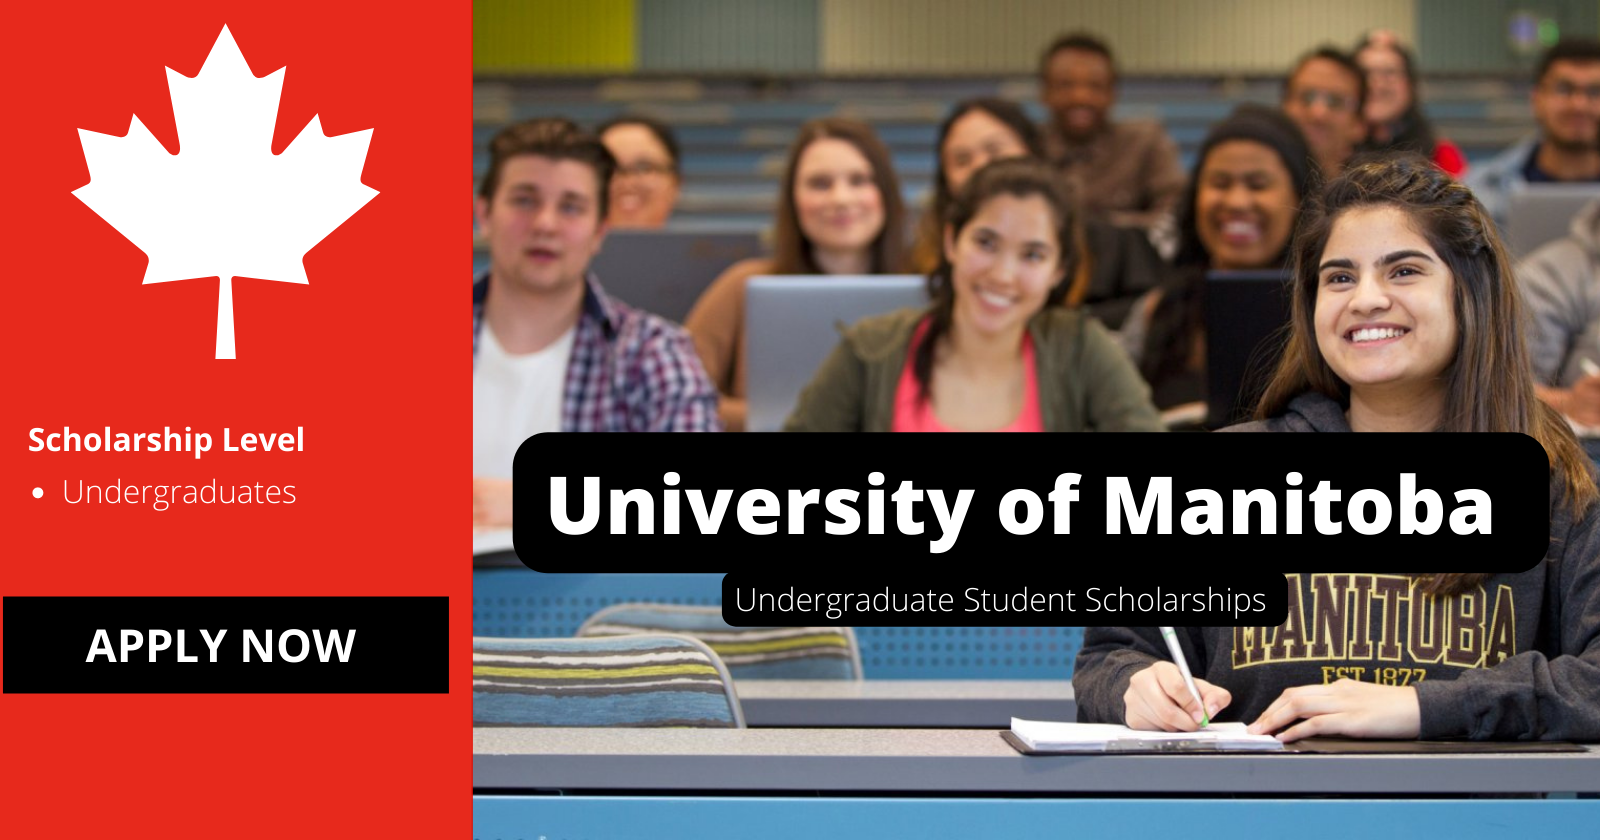 University of Manitoba Undergraduate Student Scholarships